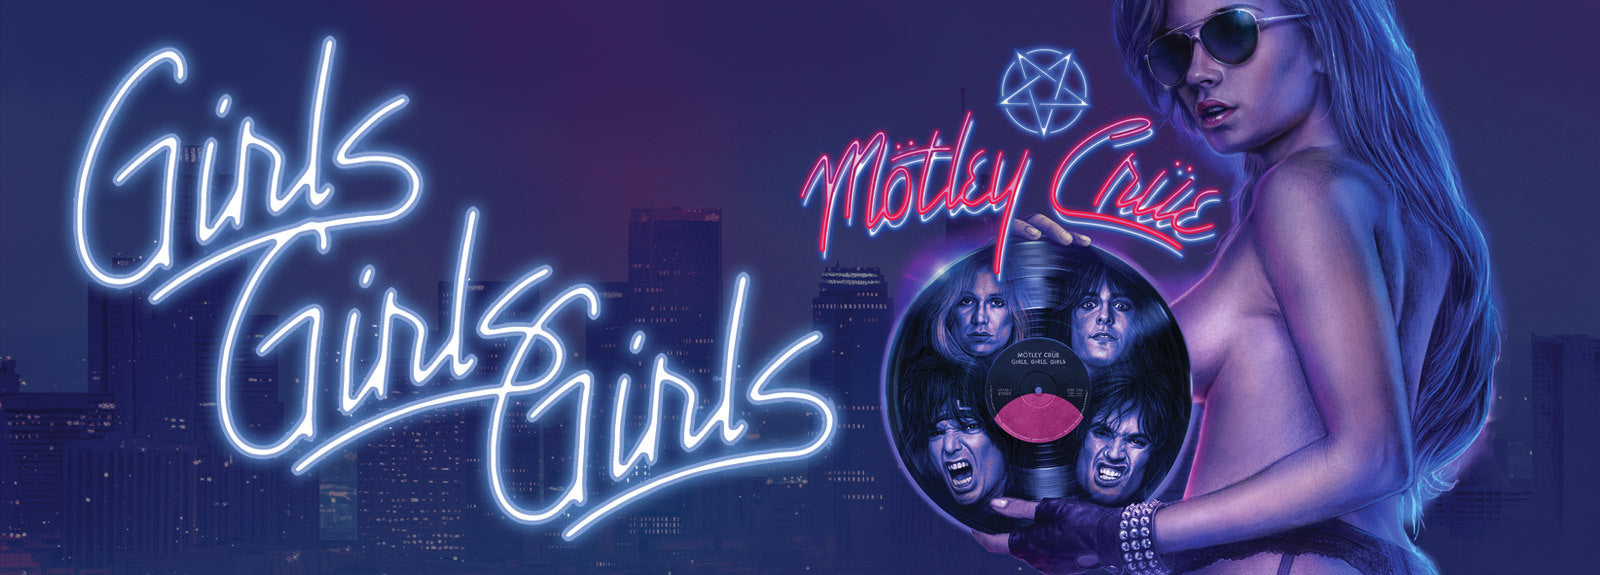 Mötley Crüe Girls, Girls, Girls